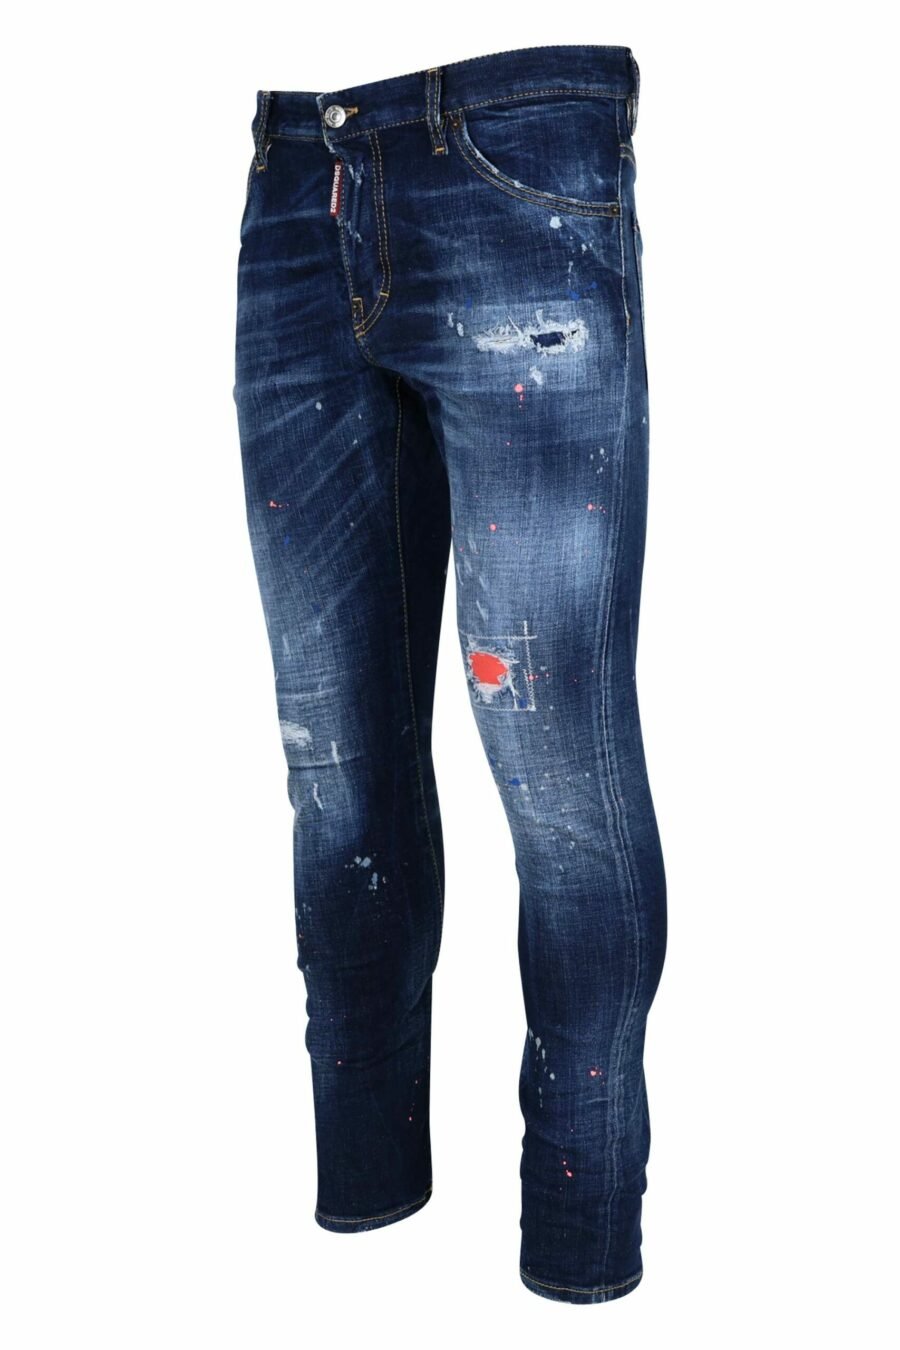 Blue "sexy twist jean" jeans worn with orange paint - 8054148308292 1 scaled